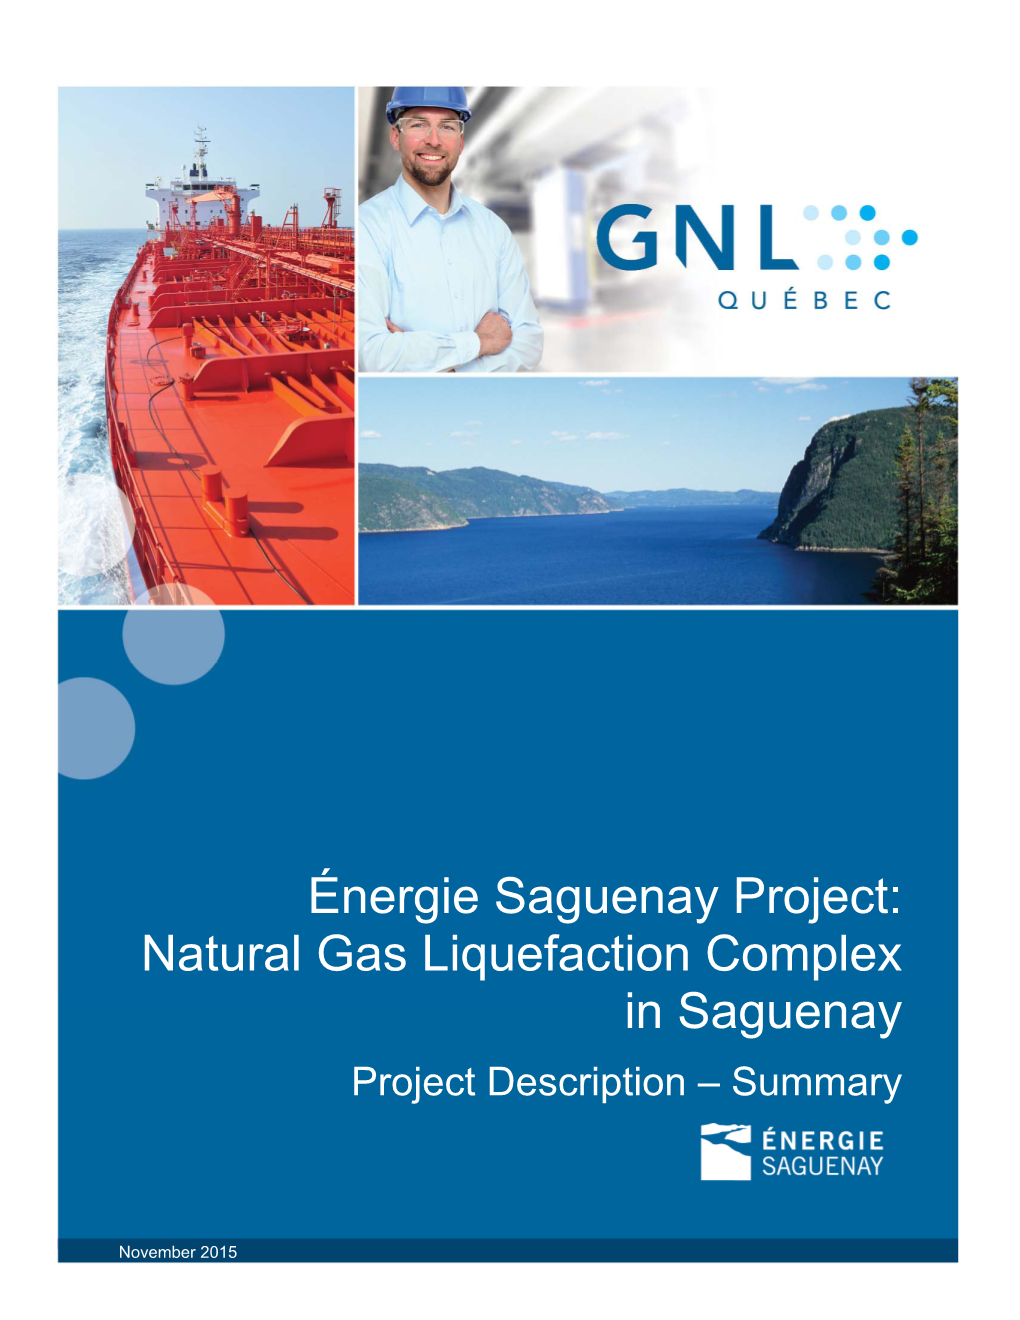 Natural Gas Liquefaction Complex in Saguenay